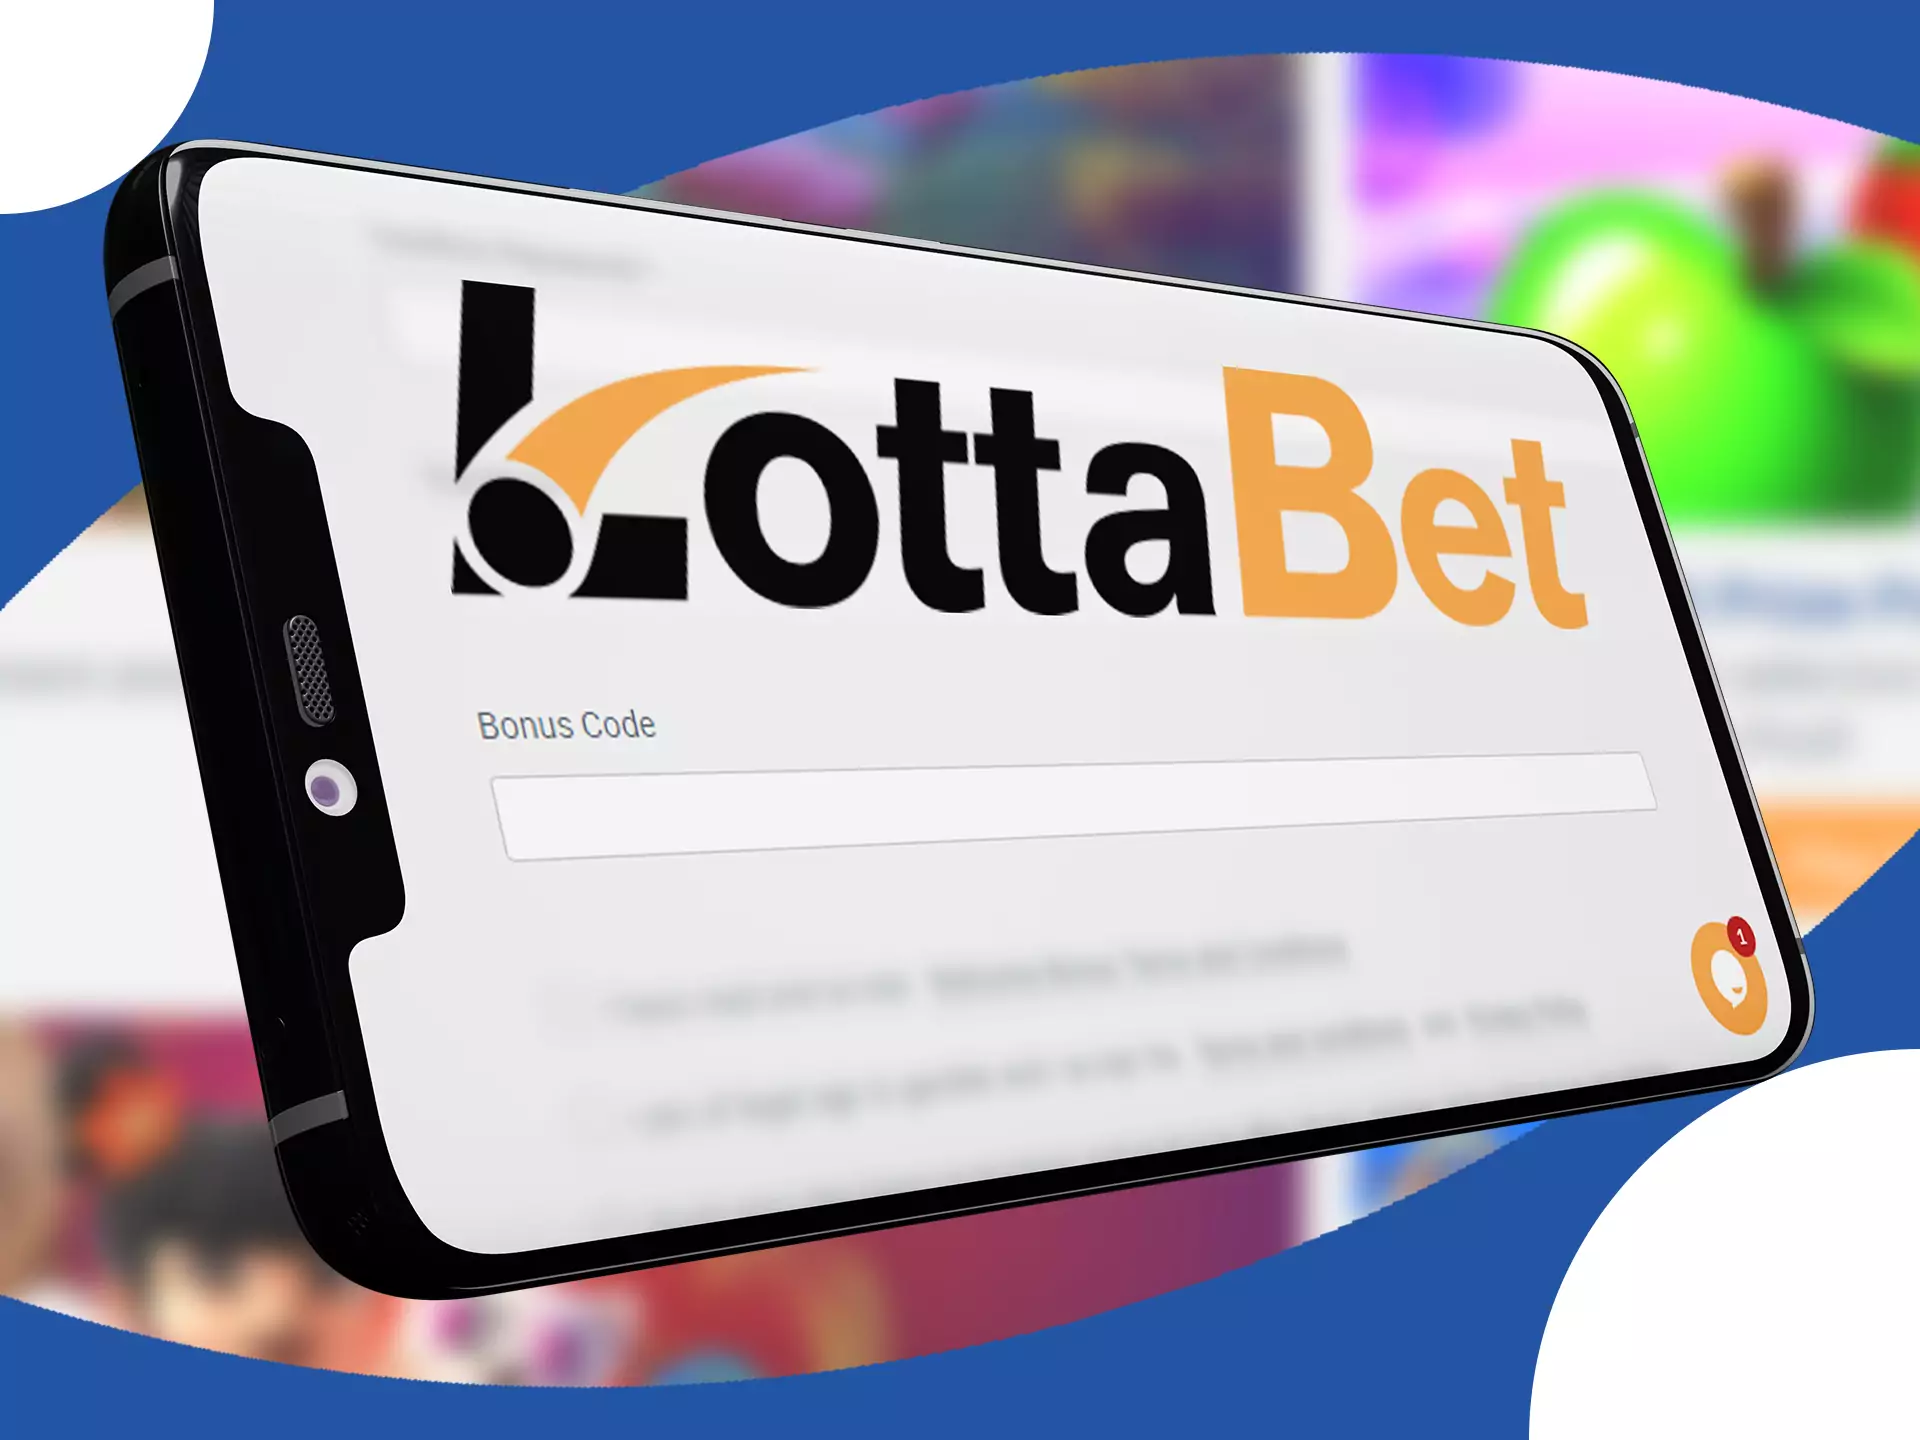 Use fresh betting promocodes in LottaBet app.